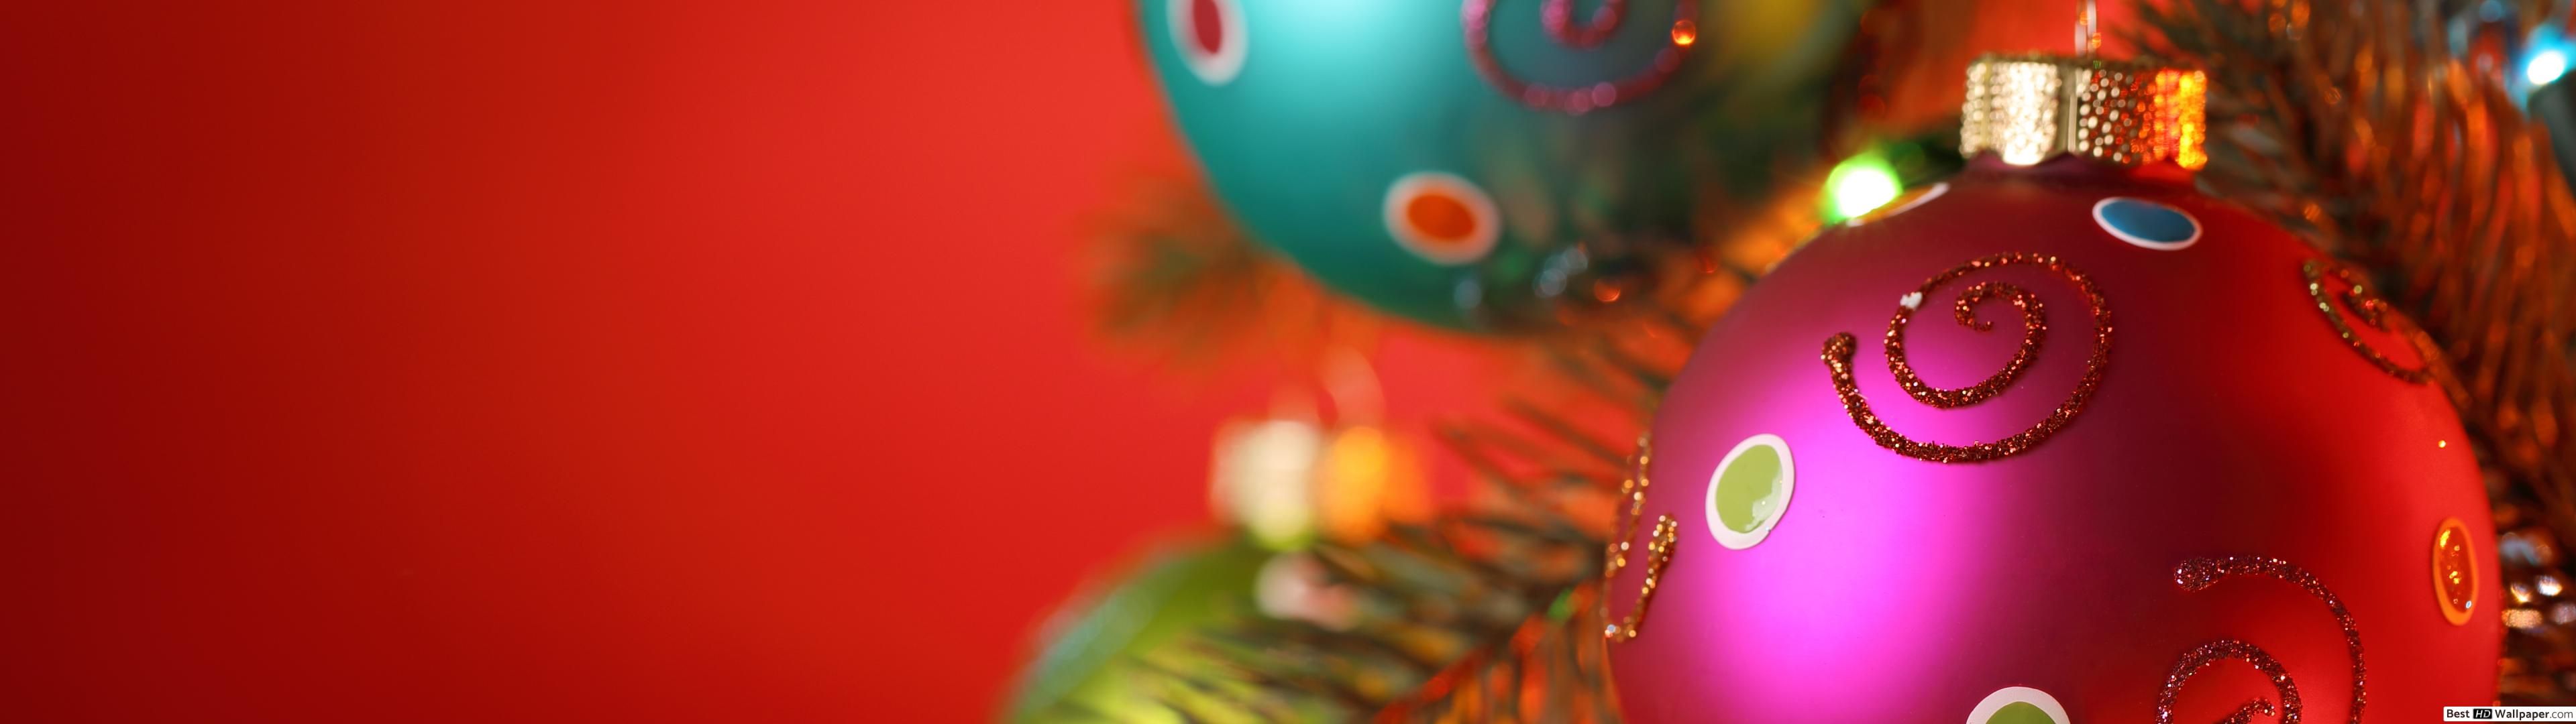 Christmas Ornaments HD wallpaper download